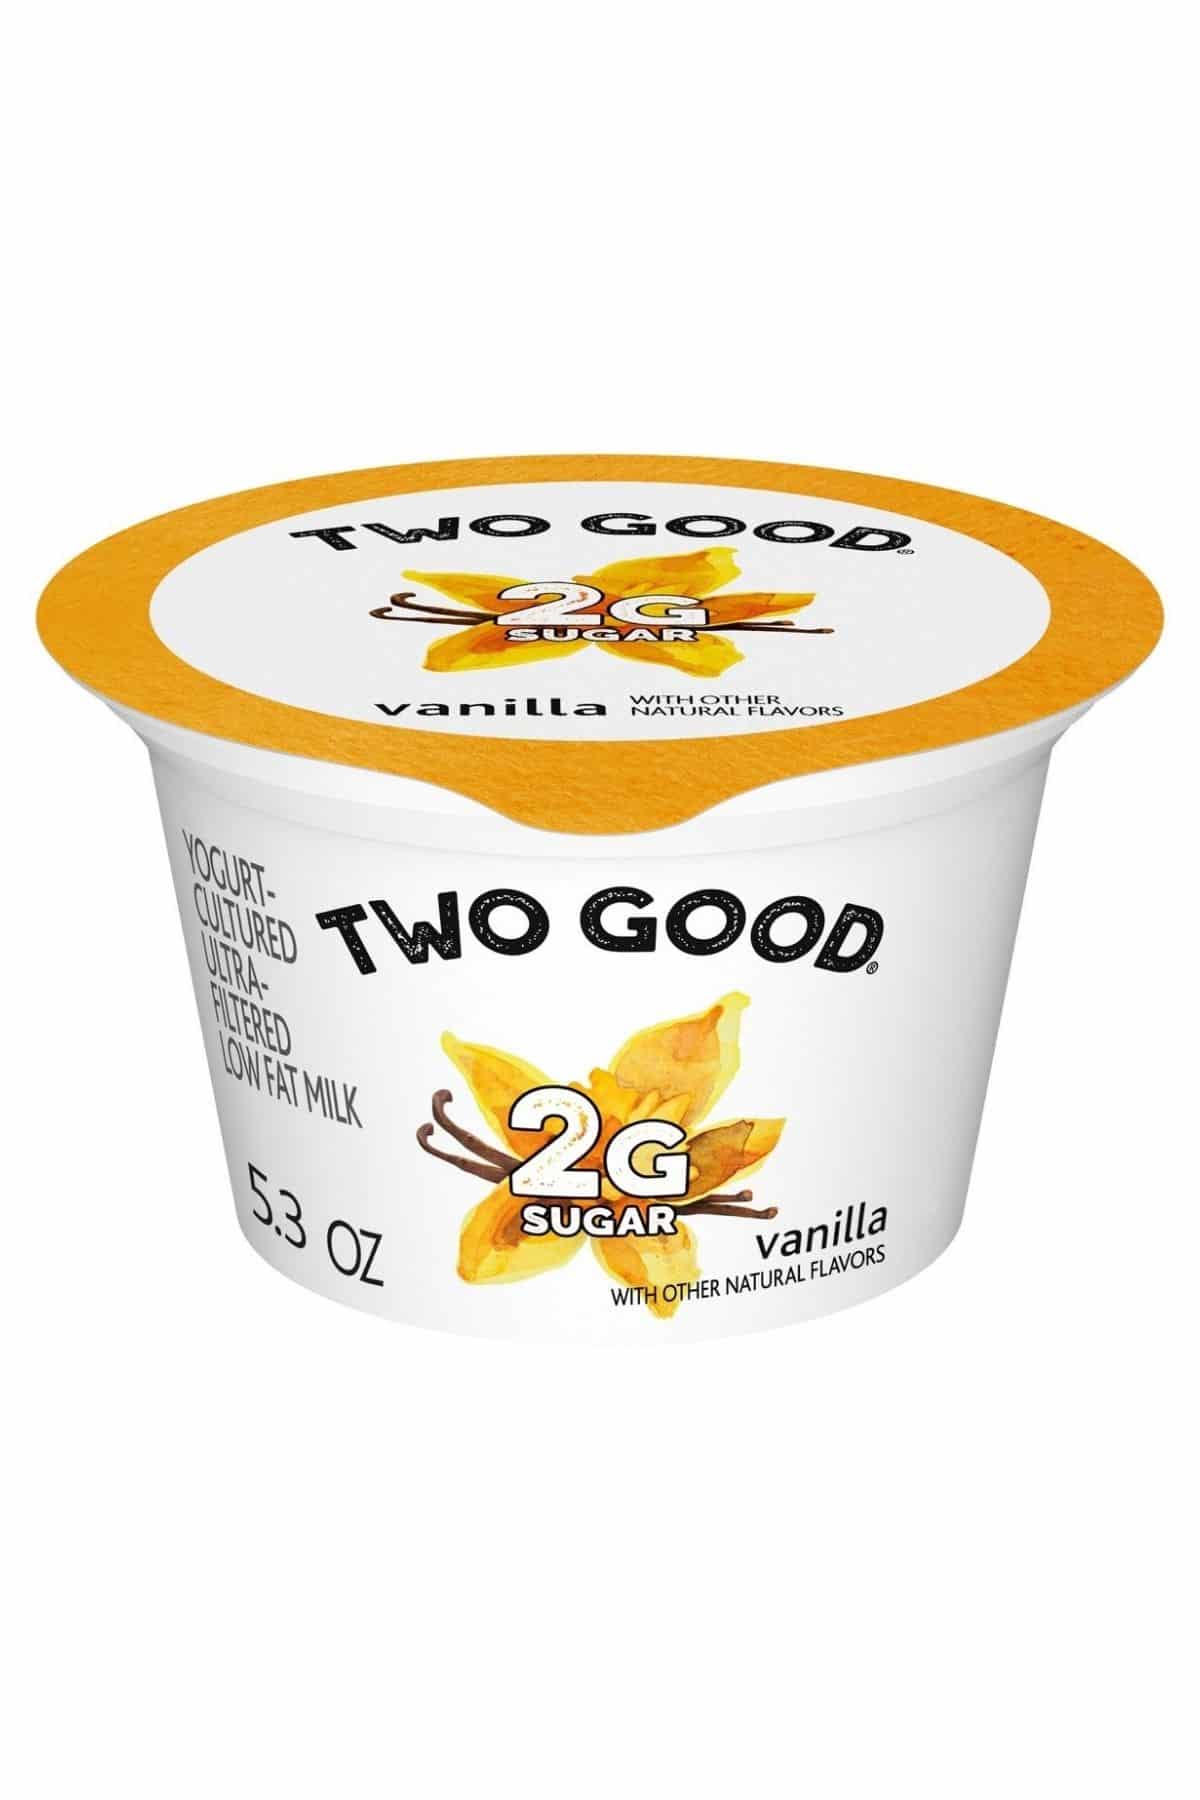 a tub of Two Good Yogurt in vanilla.